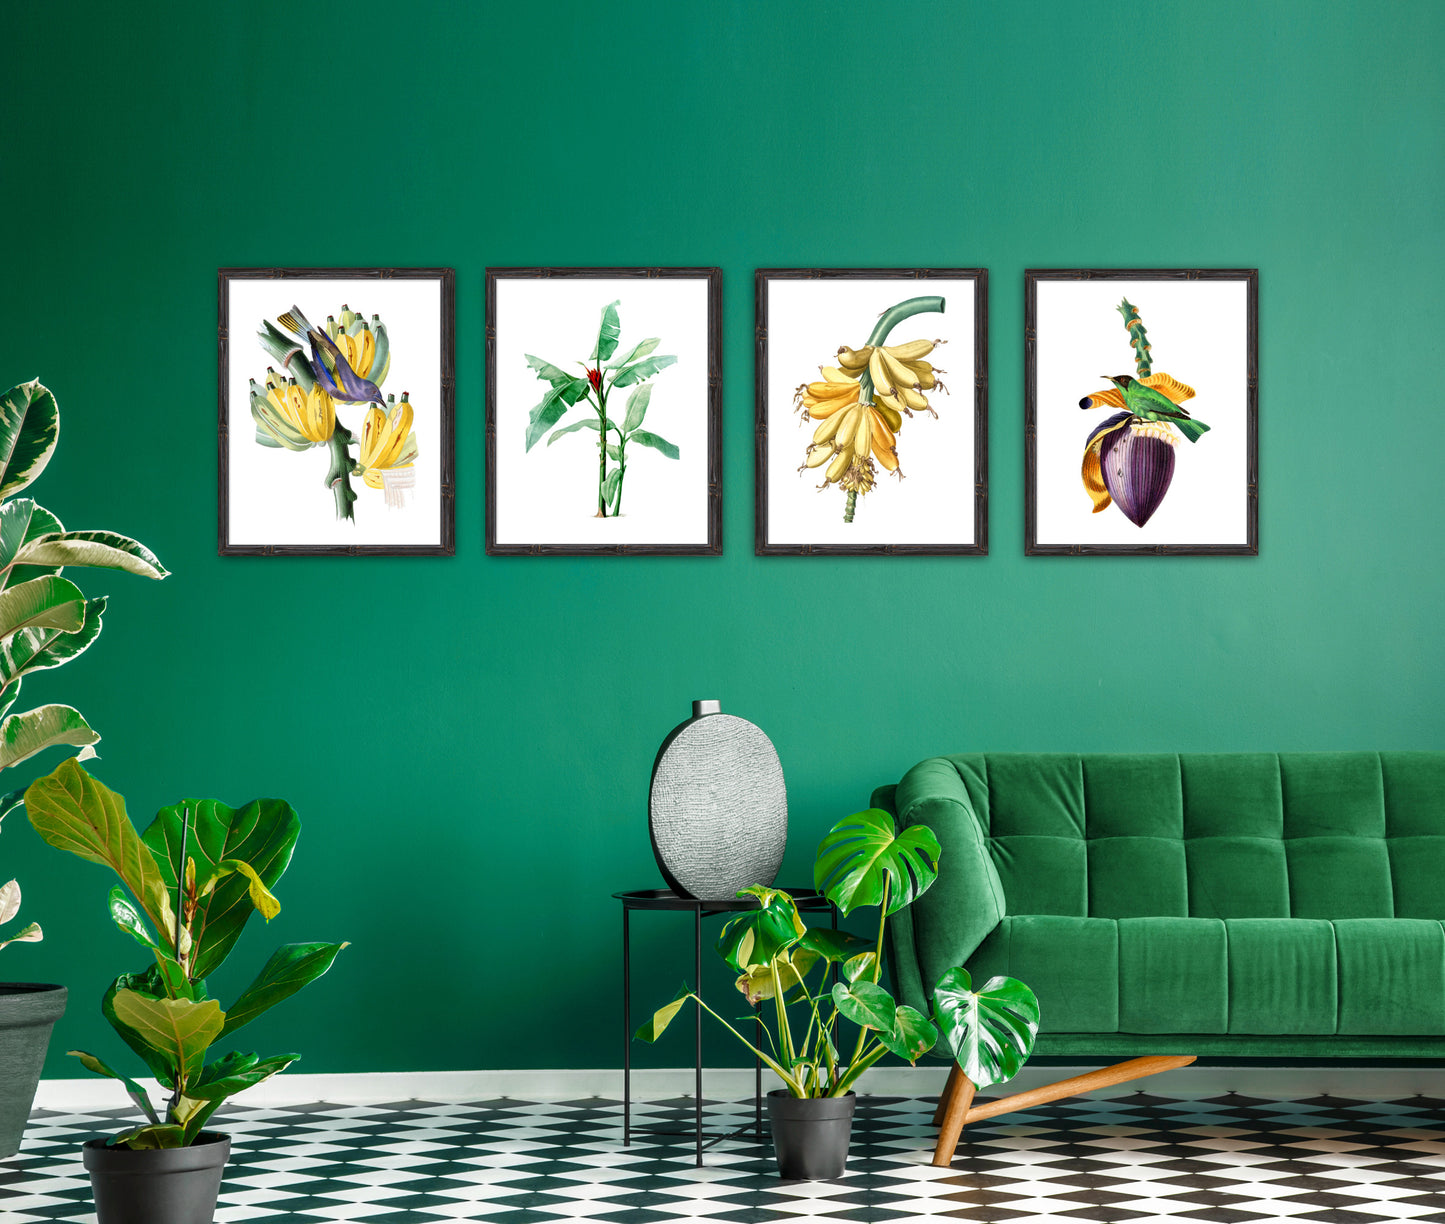 green room with set of vintage banana themed prints